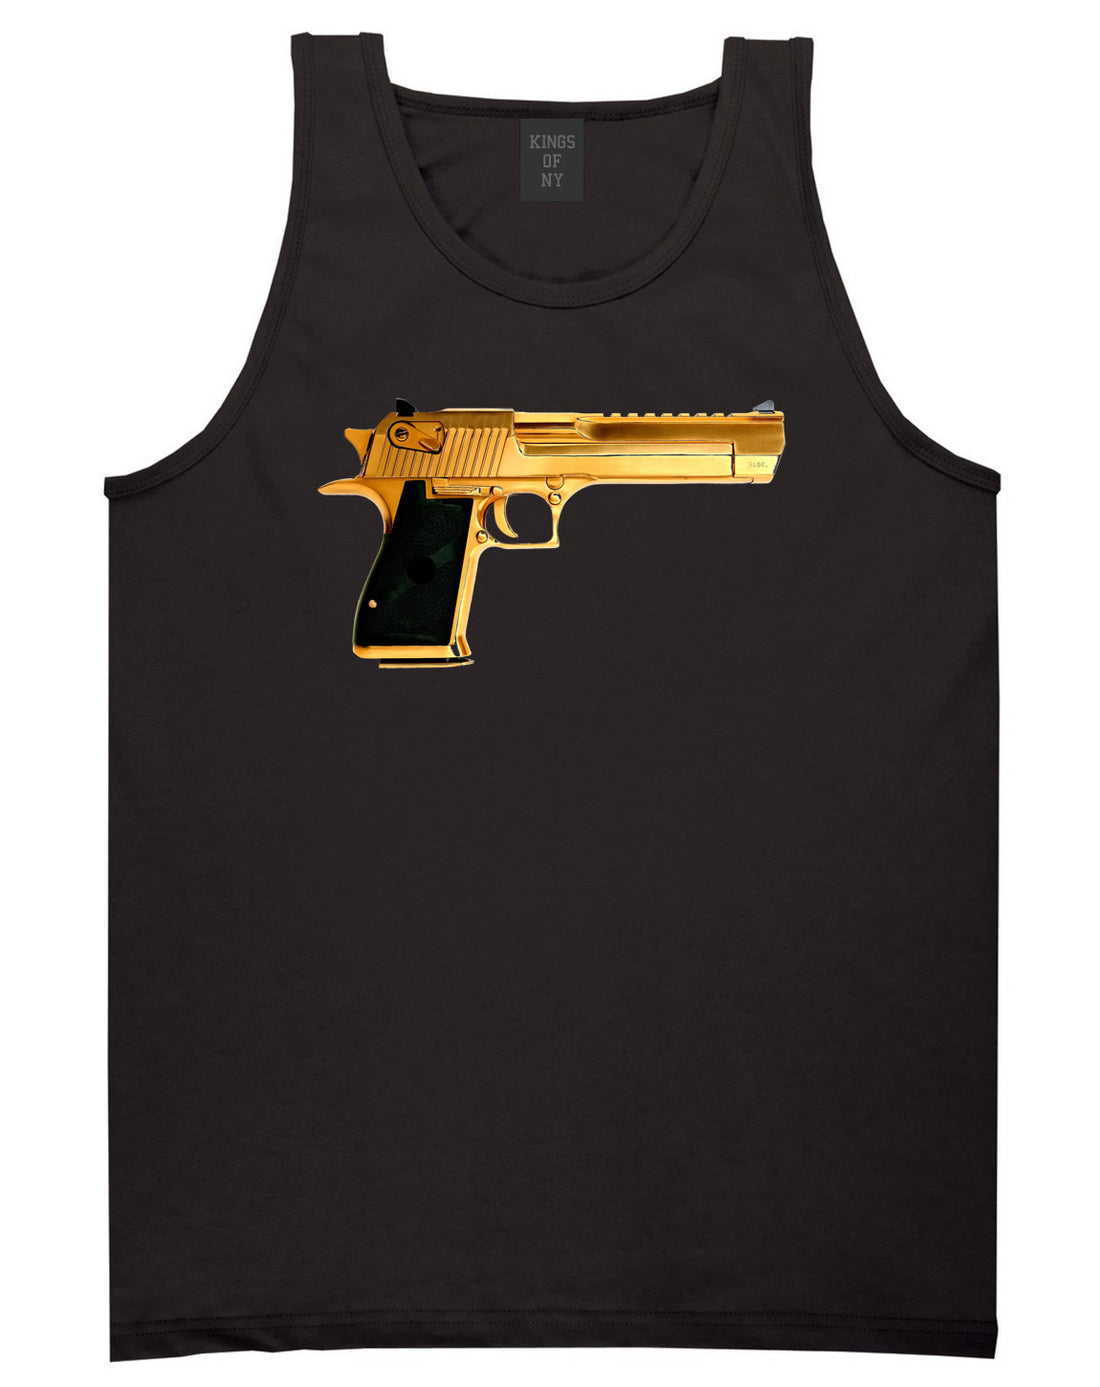 Gold Gun 9mm Revolver Chrome 45 Tank Top In Black by Kings Of NY